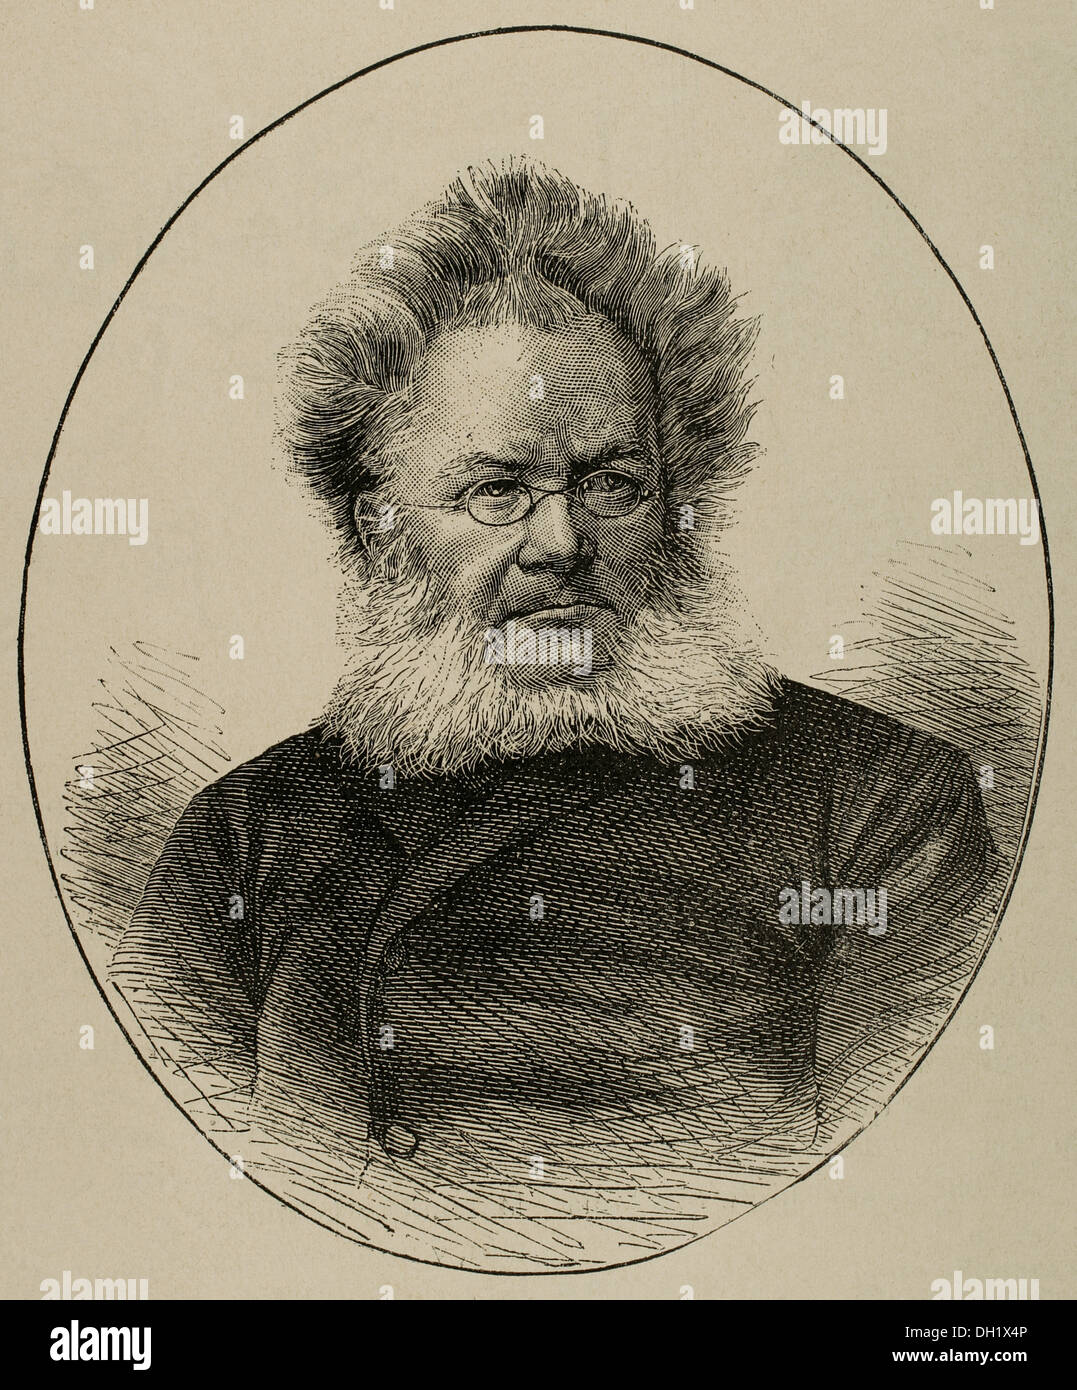 Henrik Ibsen (1828-1906). Norwegischer Dramatiker. Gravur in der katalanischen Abbildung, 1893. Stockfoto